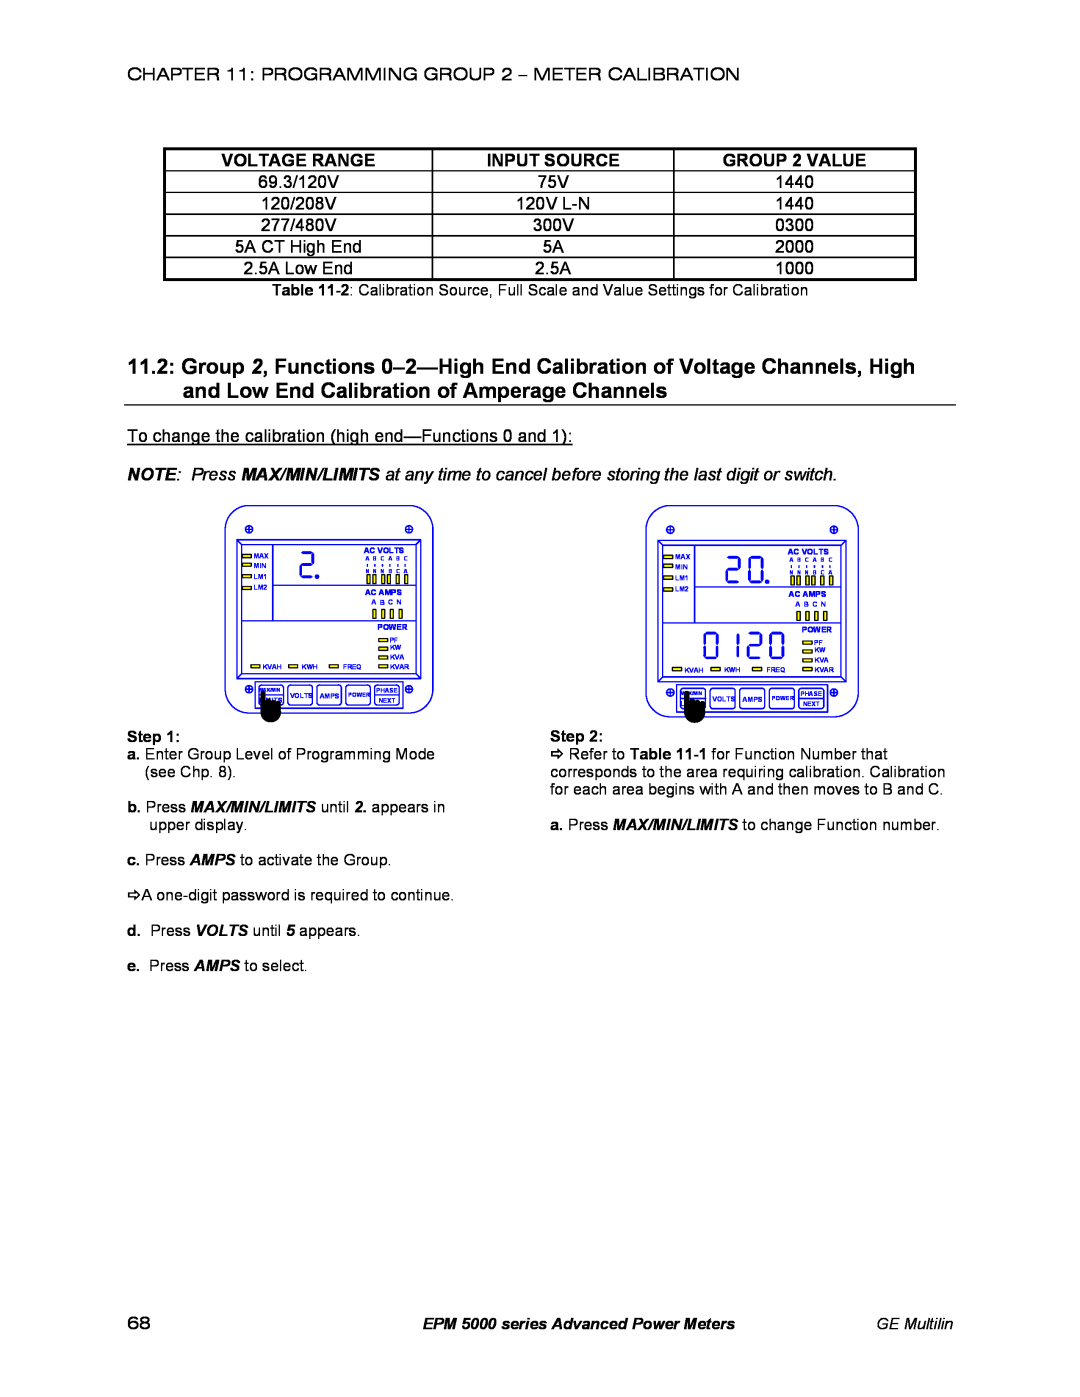 GE EPM 5200, EPM 5300, EPM 5350 instruction manual Voltage Range, Input Source, GROUP 2 VALUE 